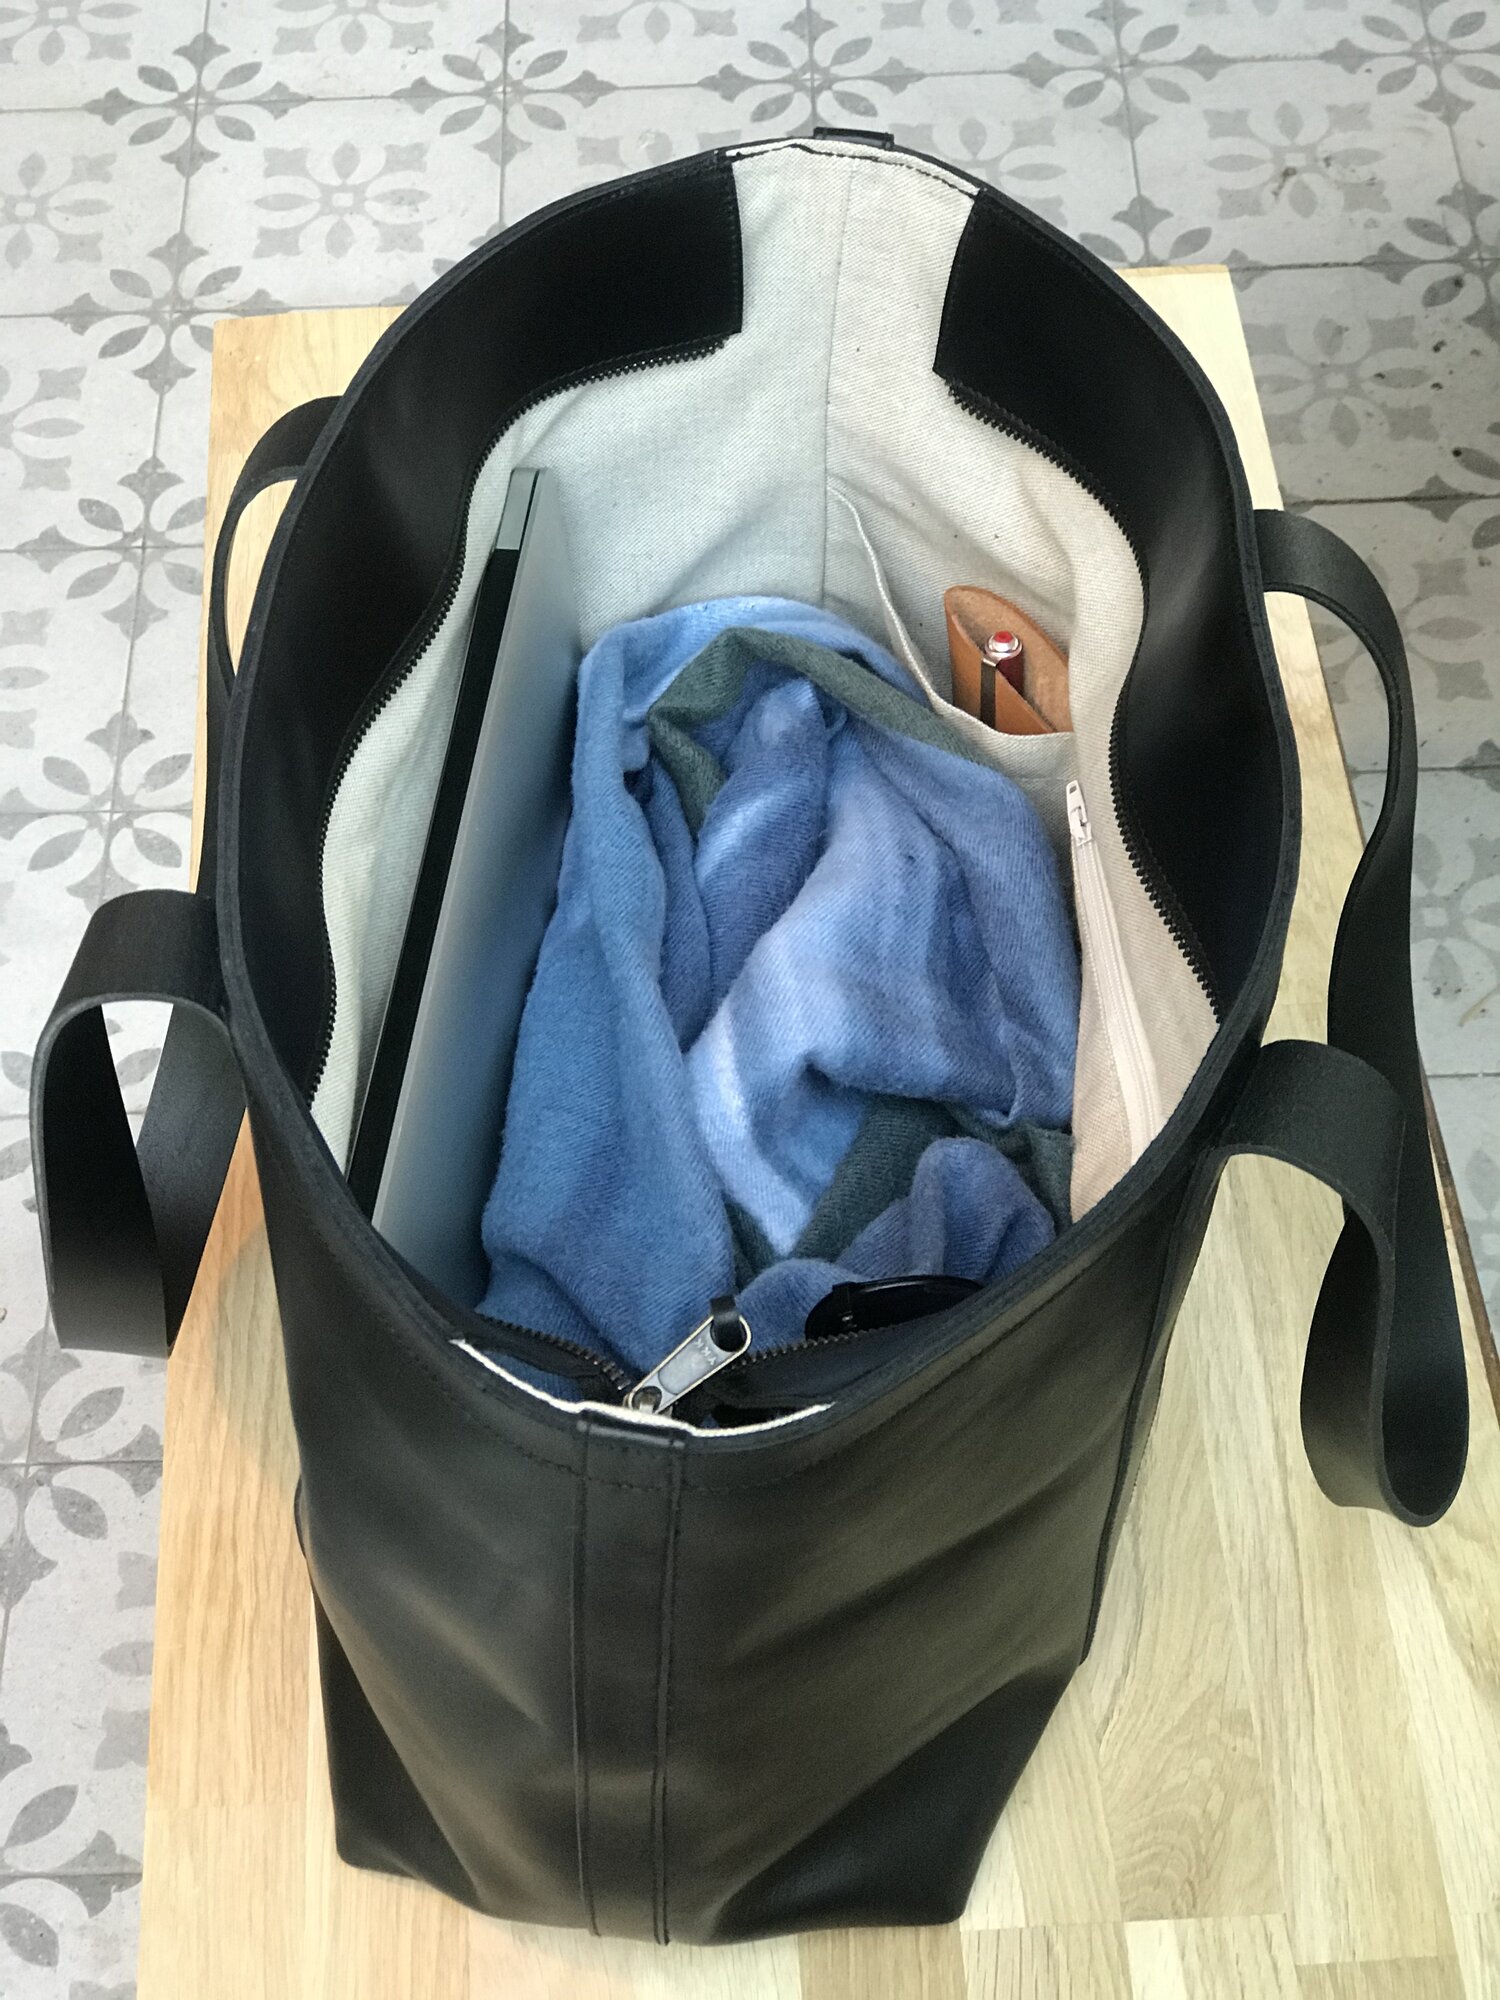 Oversized Tan Leather bag. Rocabruna Bag. — Vermut Atelier